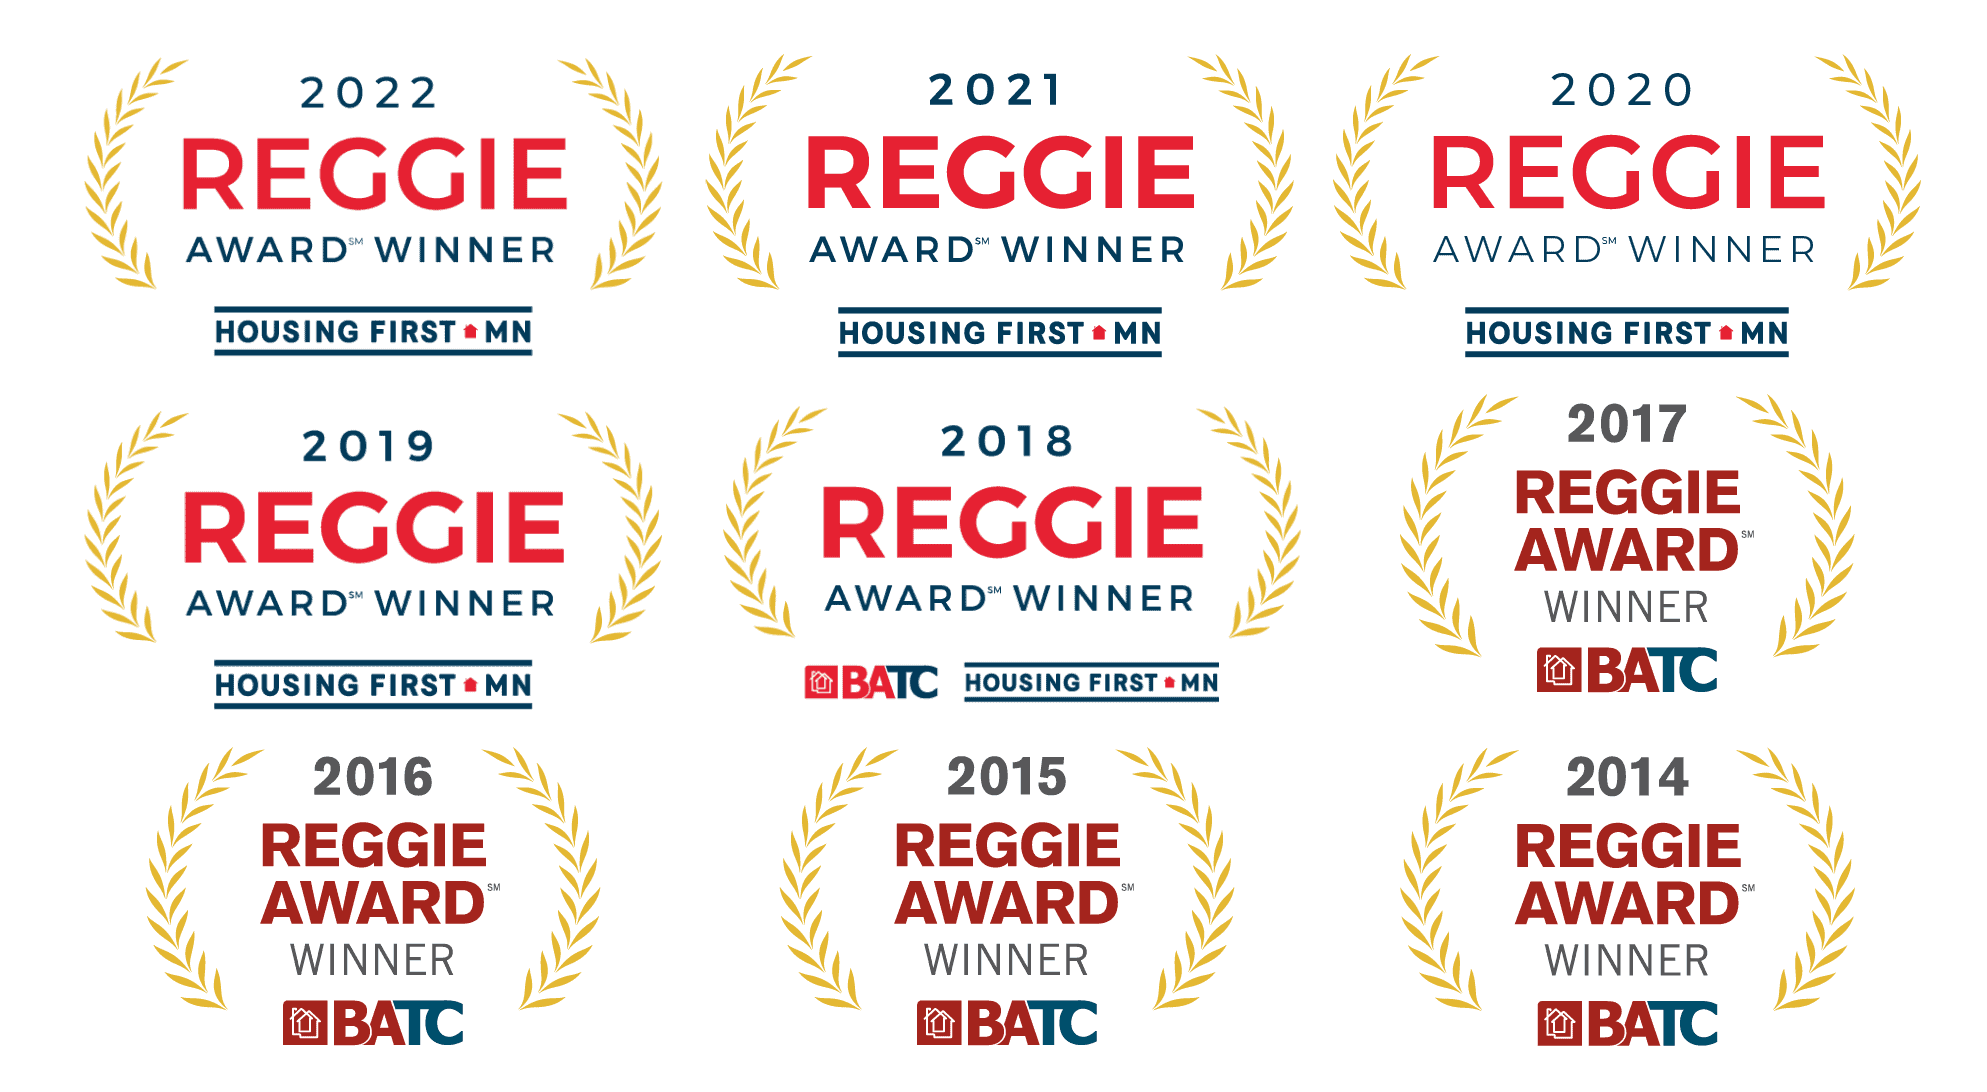 grid of reggie logos from 2014 through 2022